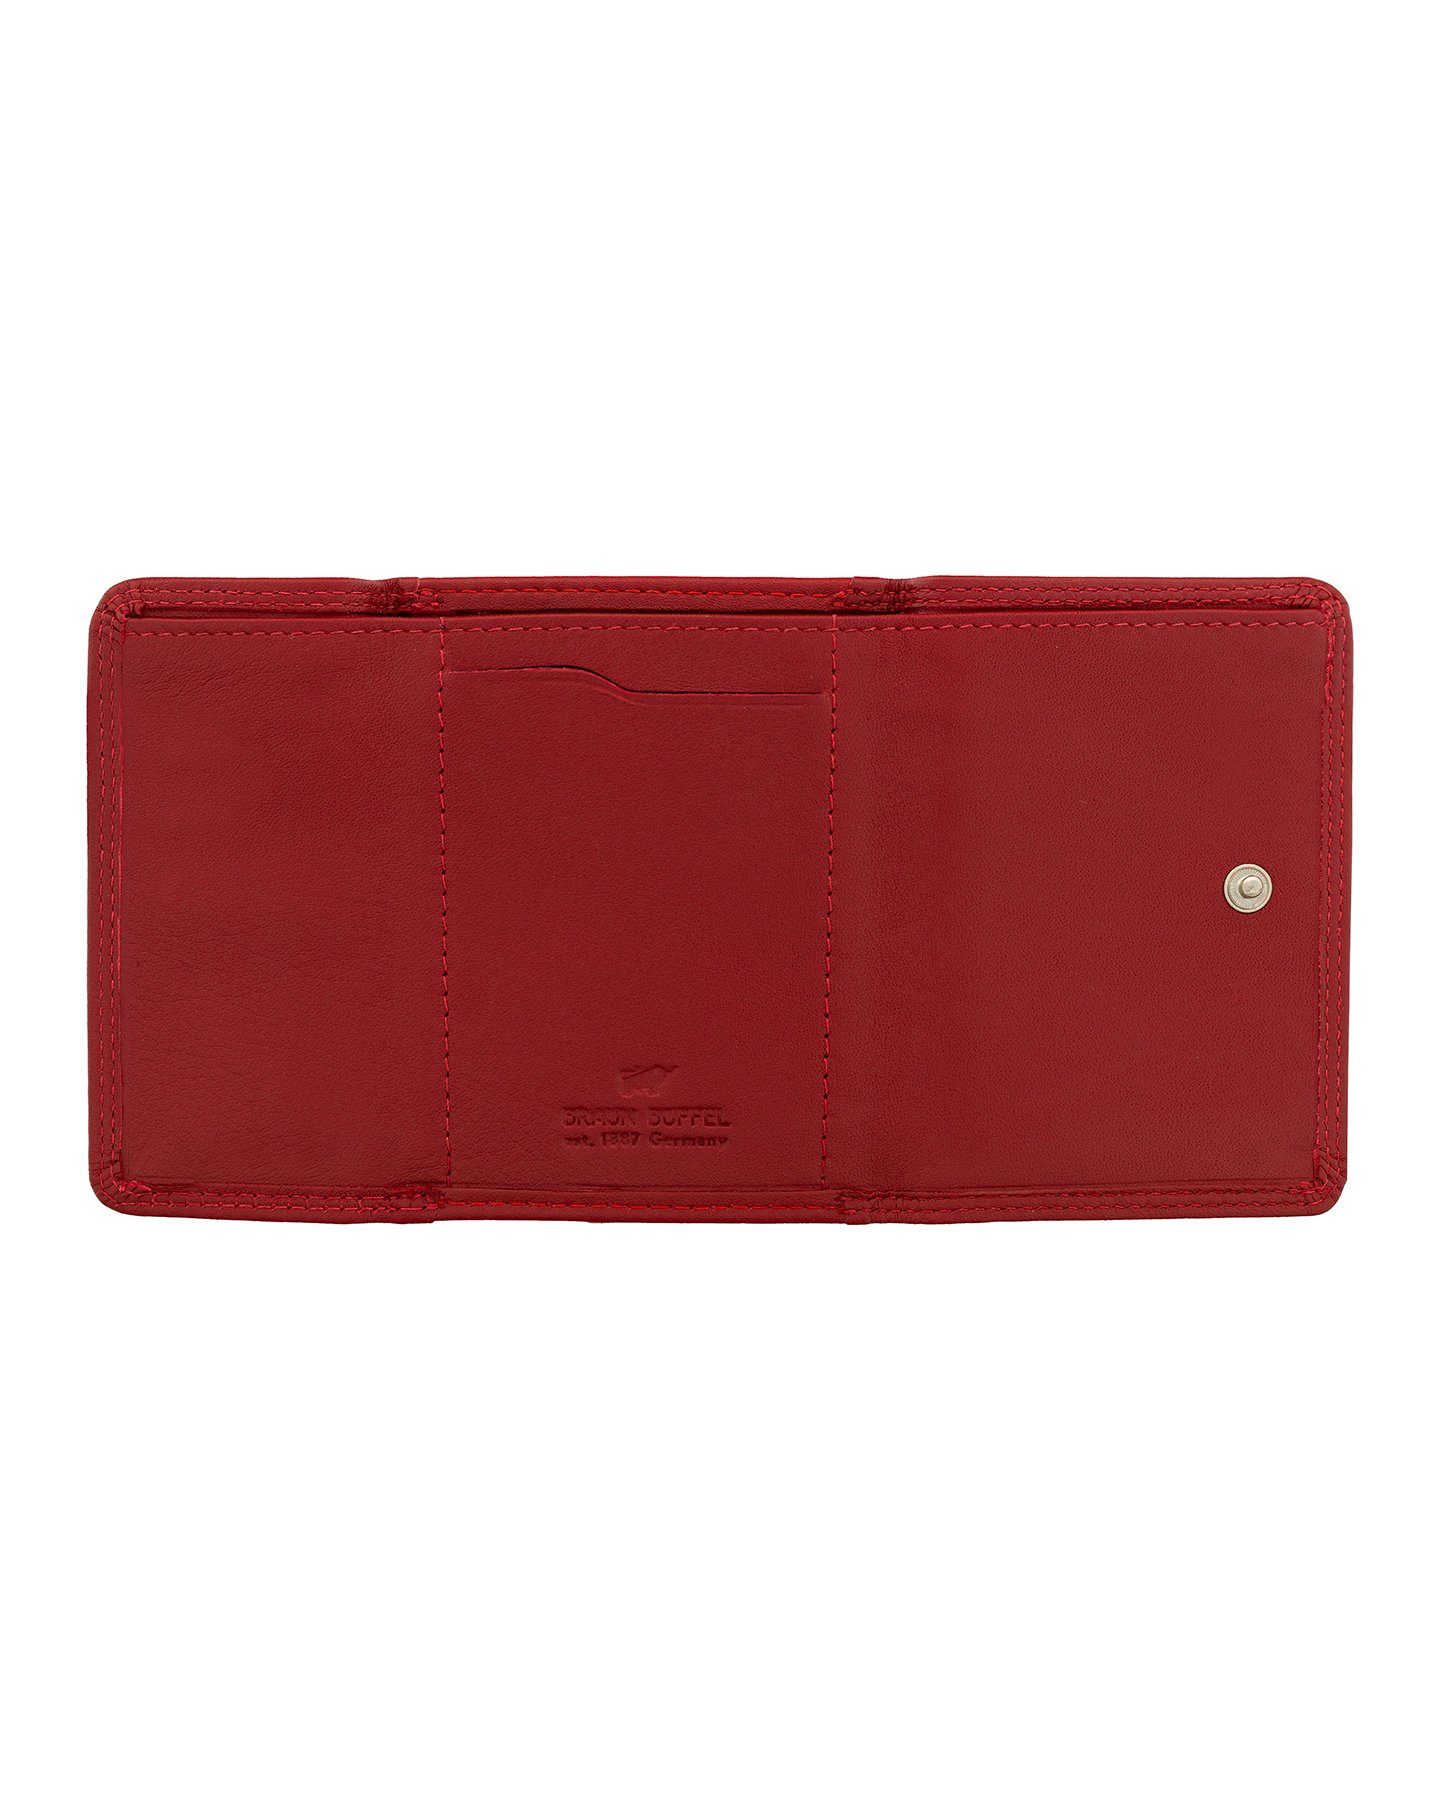 Braun im rot Wiener-Schachtel-Format kompakten Büffel Geldbörse 2CS, 2.0 GOLF Mini Geldbörse